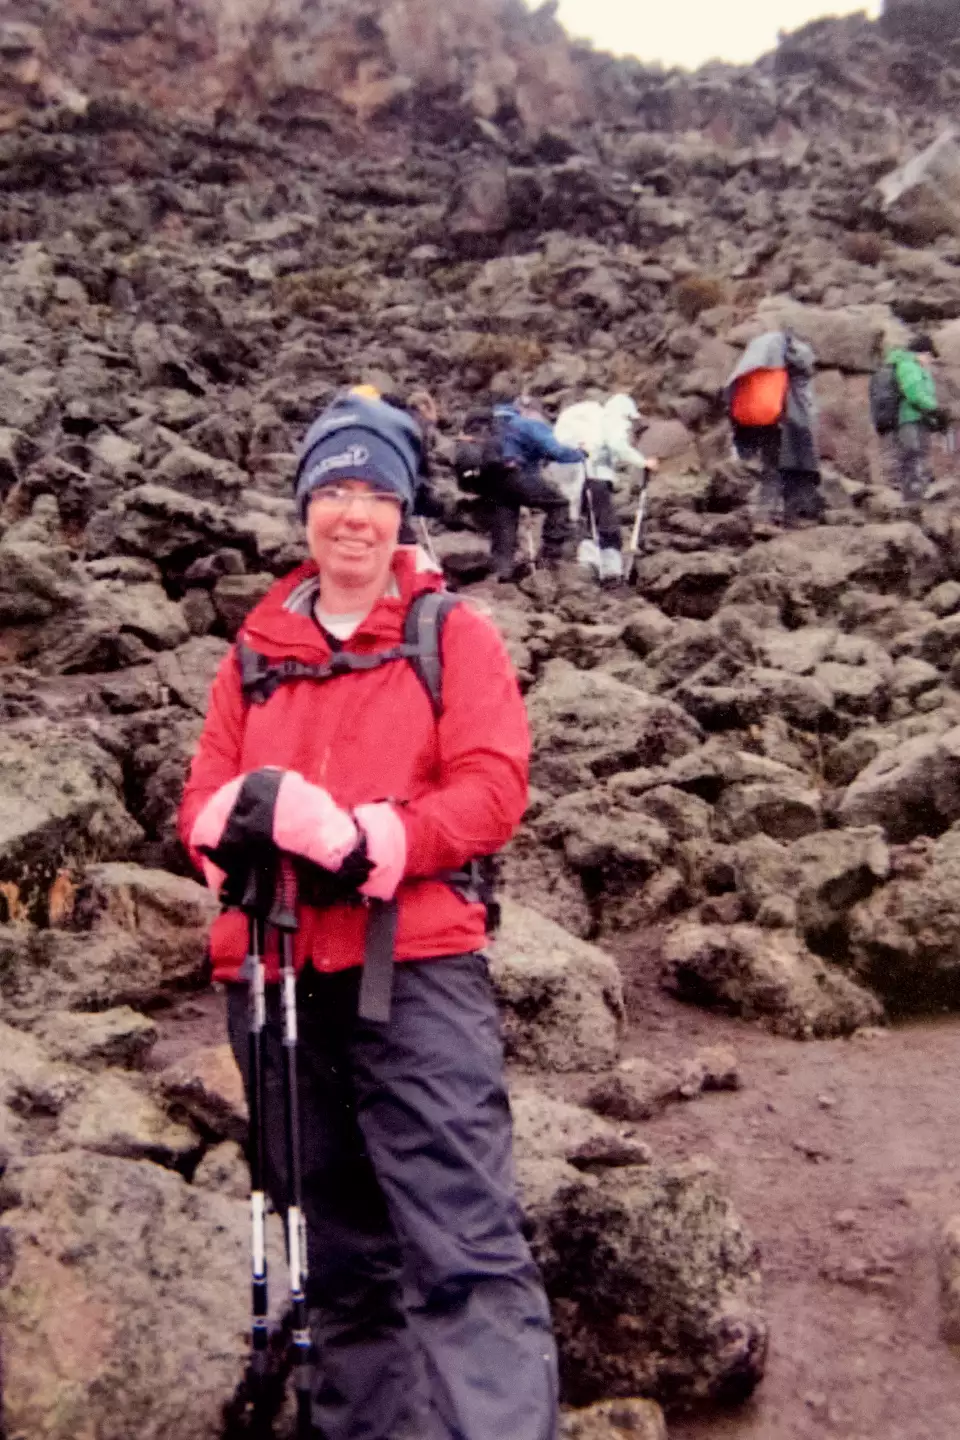 Asda Nuneaton community champion Denise climbing Kilimanjaro for charity